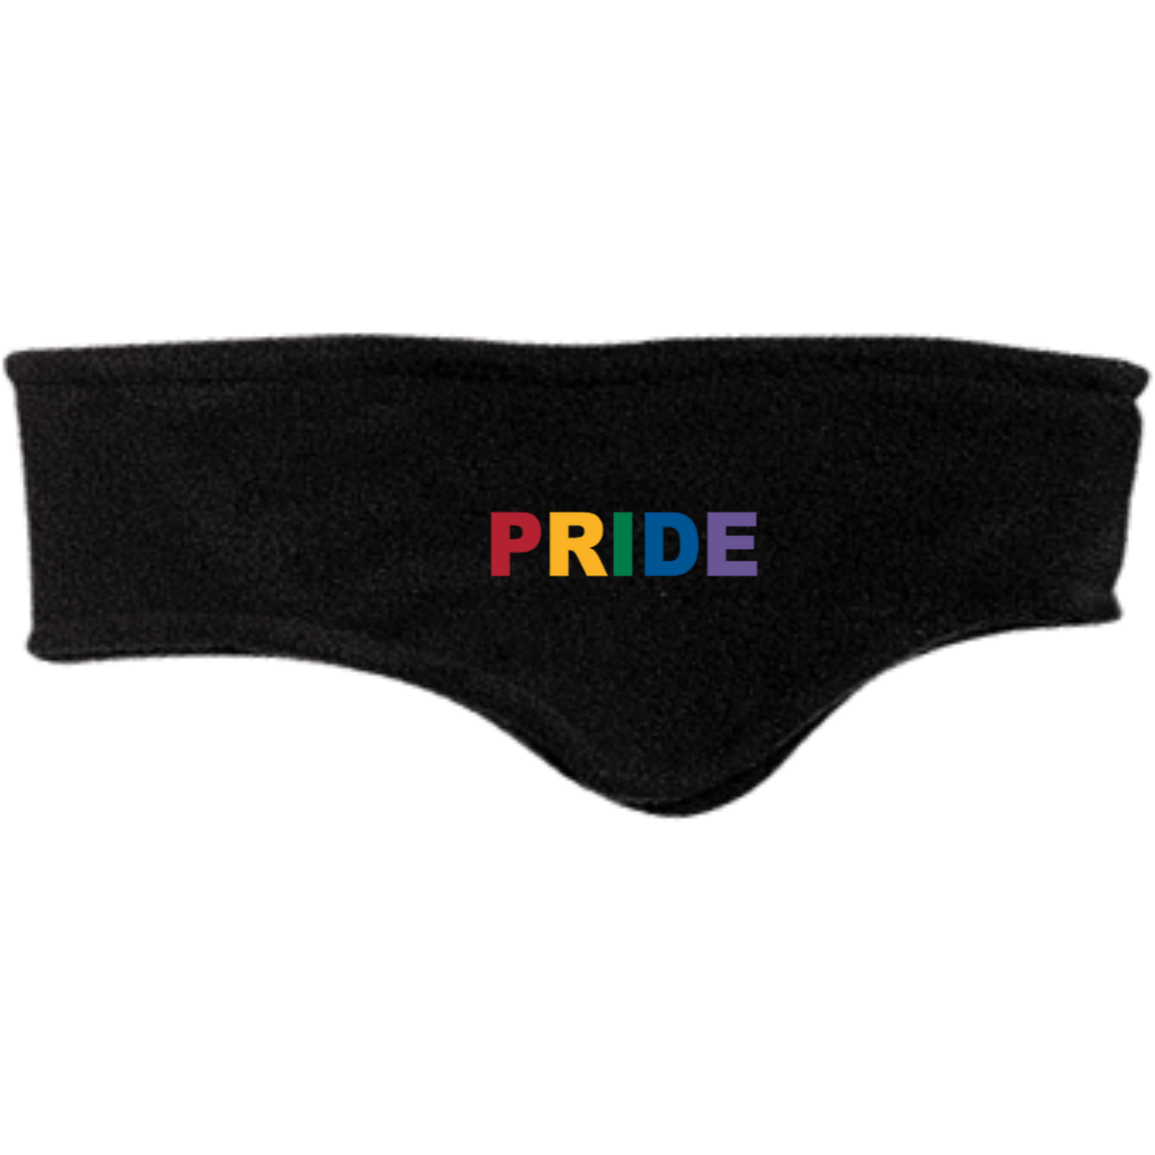 Rainbow Pride Headband For All Myprideshop